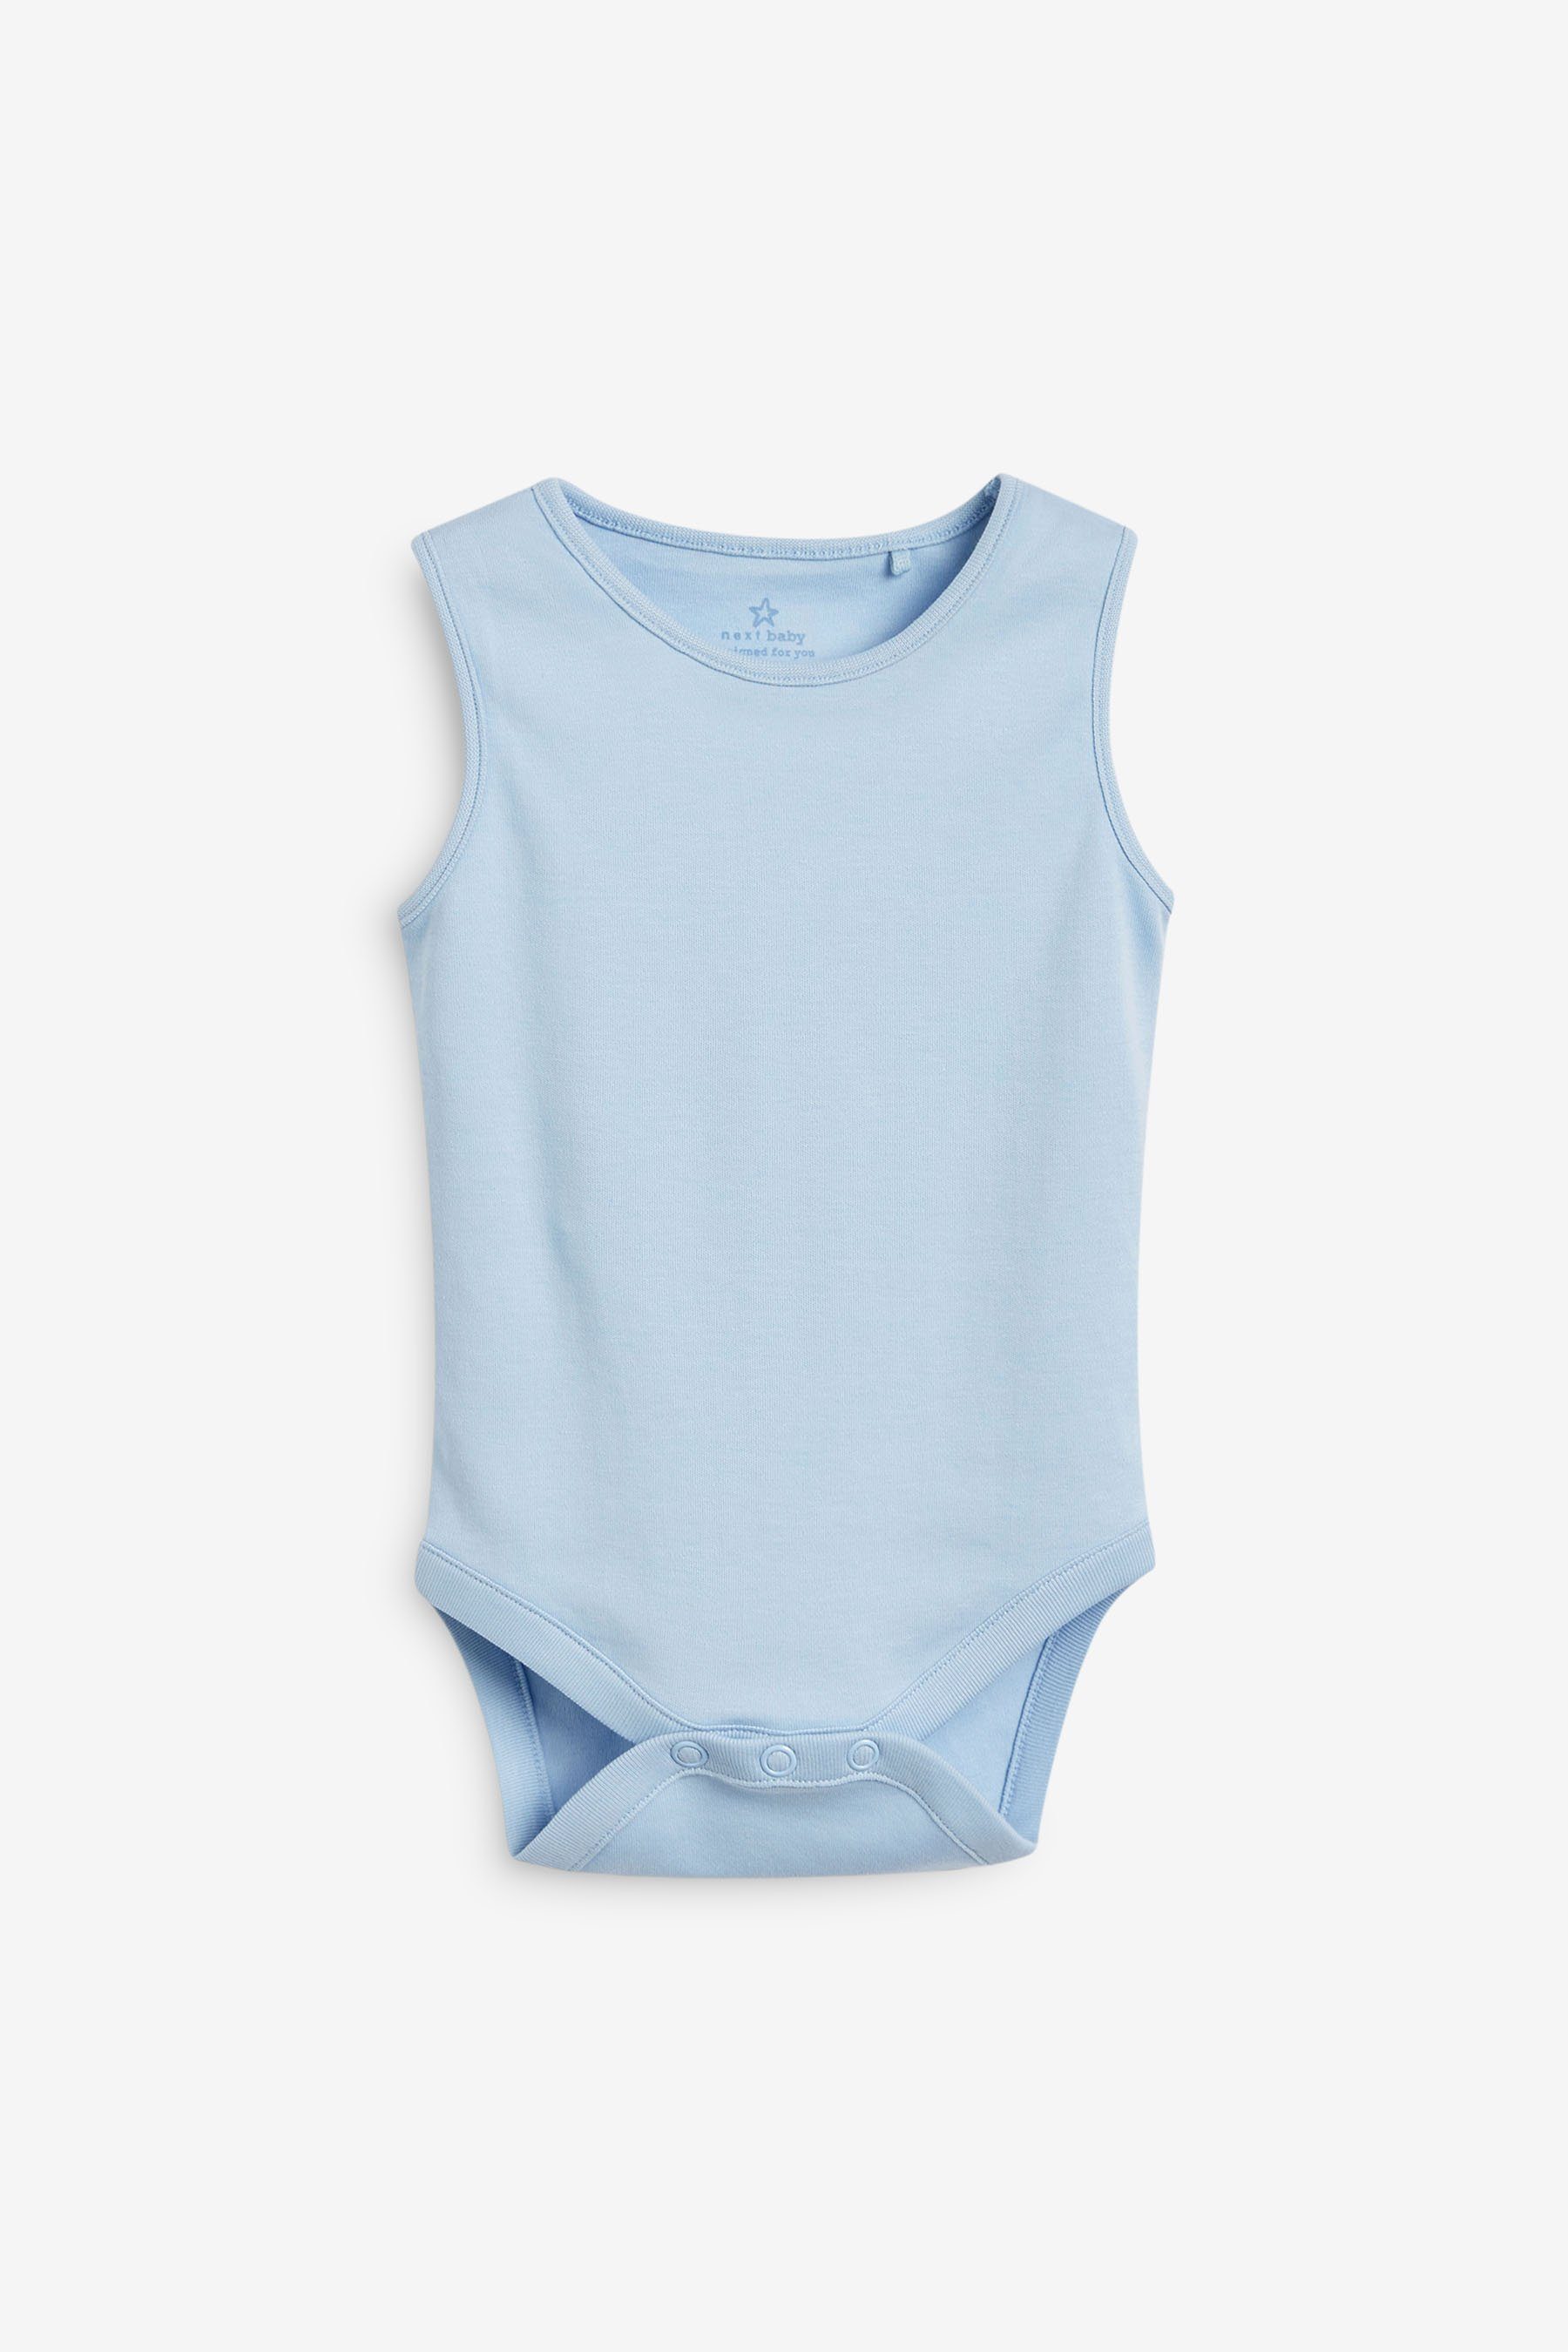 Next (5-tlg) Body Blue ärmellose Baby-Bodysuits 5er-Pack